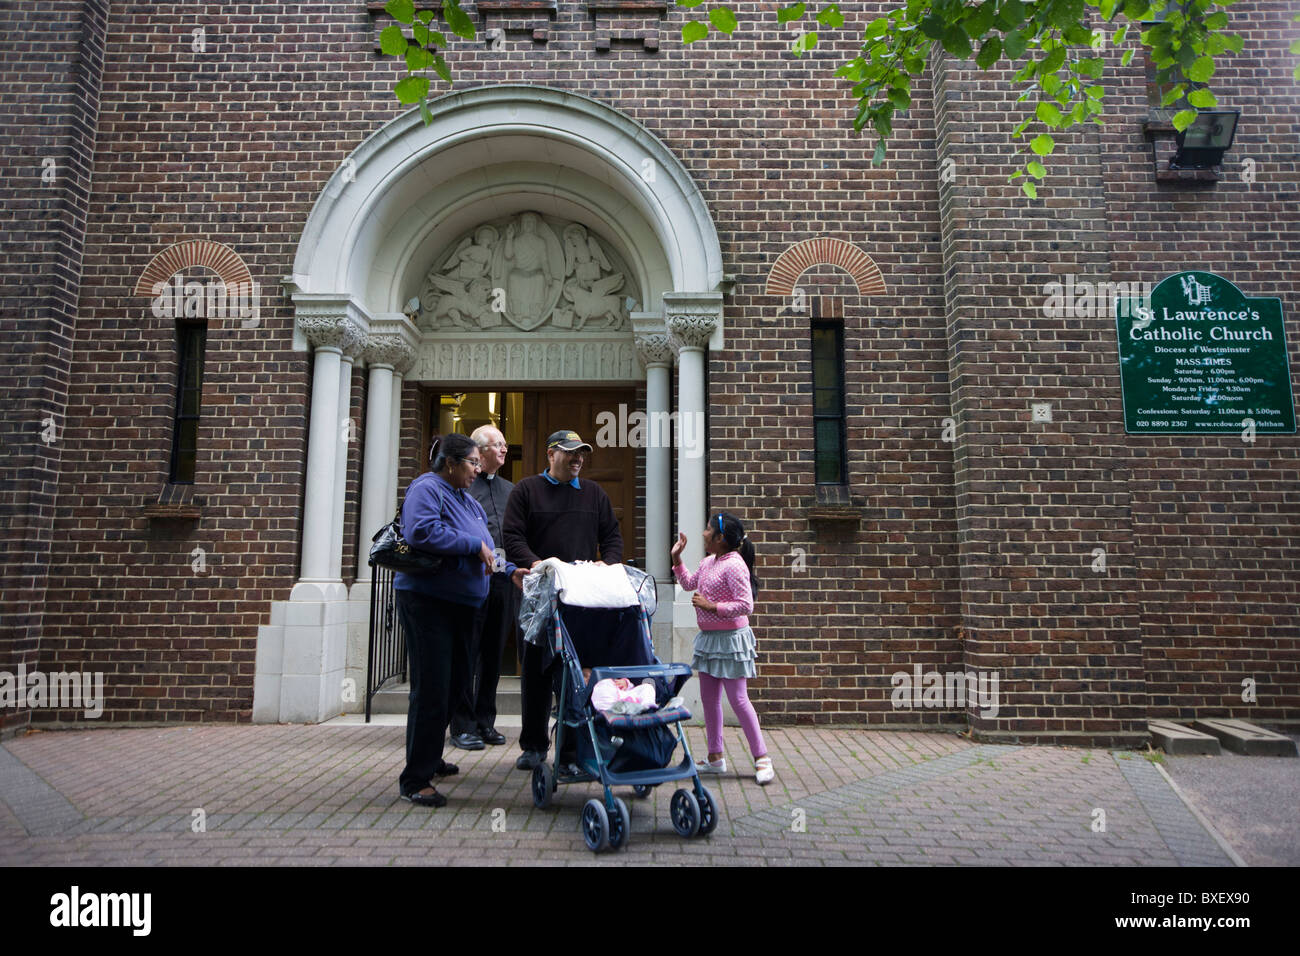 Catholic priest bids goodbye to parish family after morning Mass at St. Lawrence's Catholic church in Feltham, London. Stock Photo